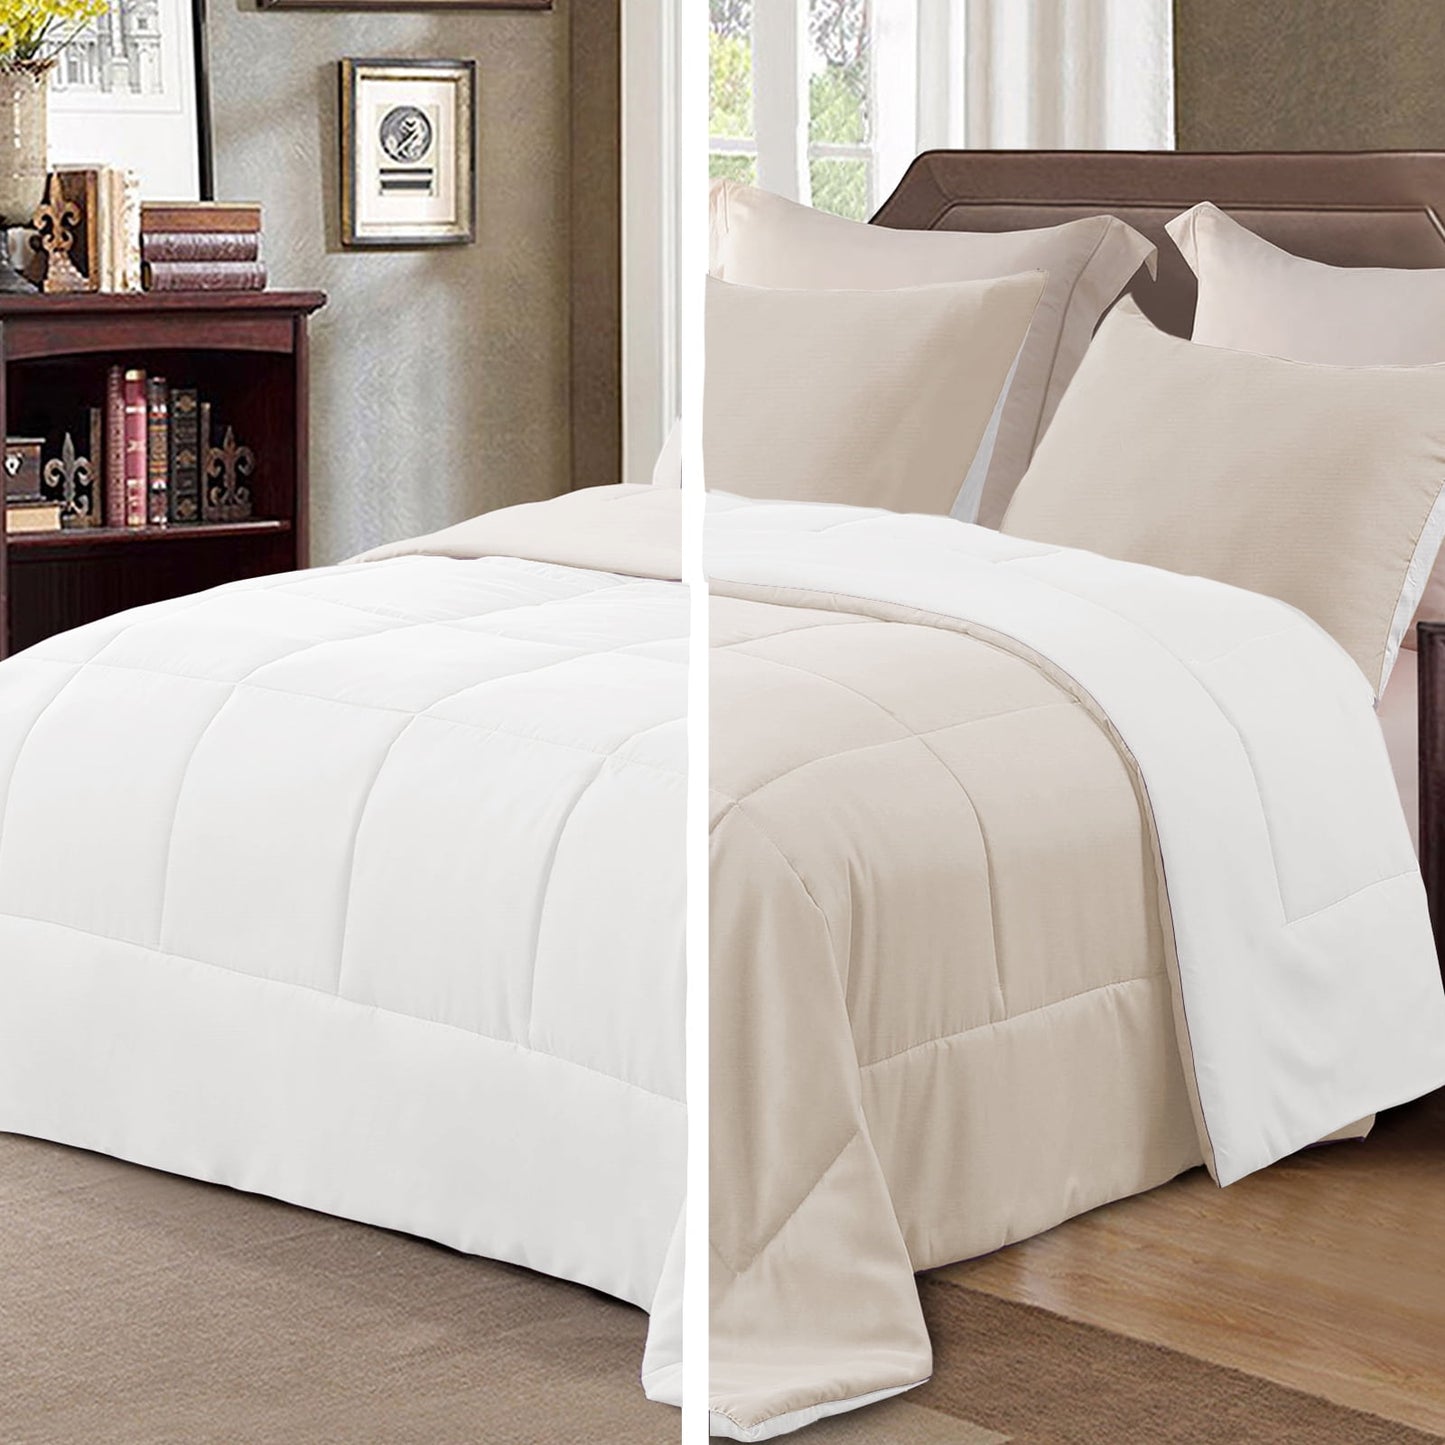 Exclusivo Mezcla Lightweight Reversible 3-Piece Comforter Set All Seasons, Down Alternative Comforter with 2 Pillow Shams, Queen Size, Beige/White